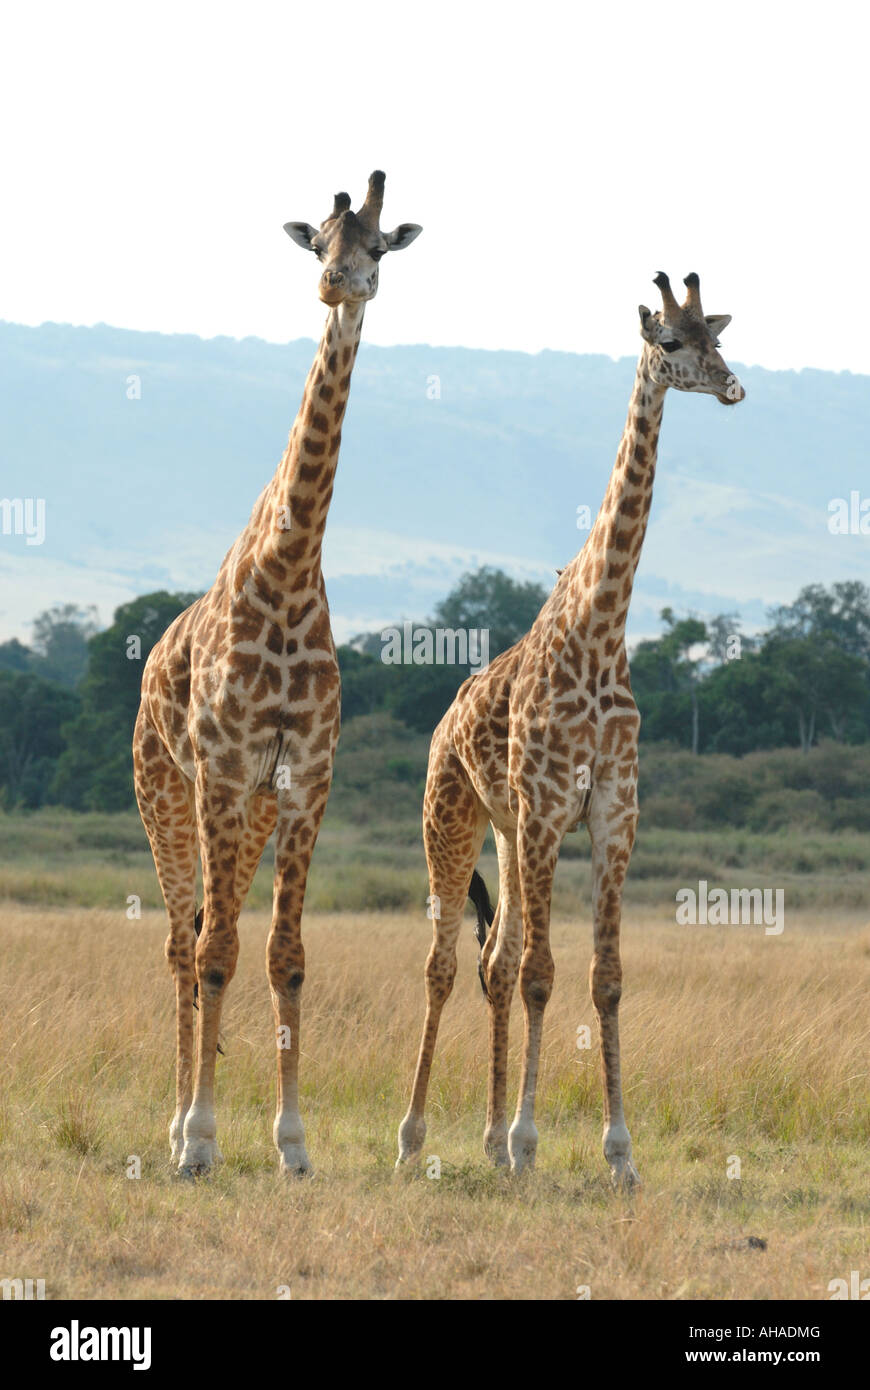 Two adult Masai or Common Giraffe in the Masai Mara National Reserve Kenya East Africa Stock Photo